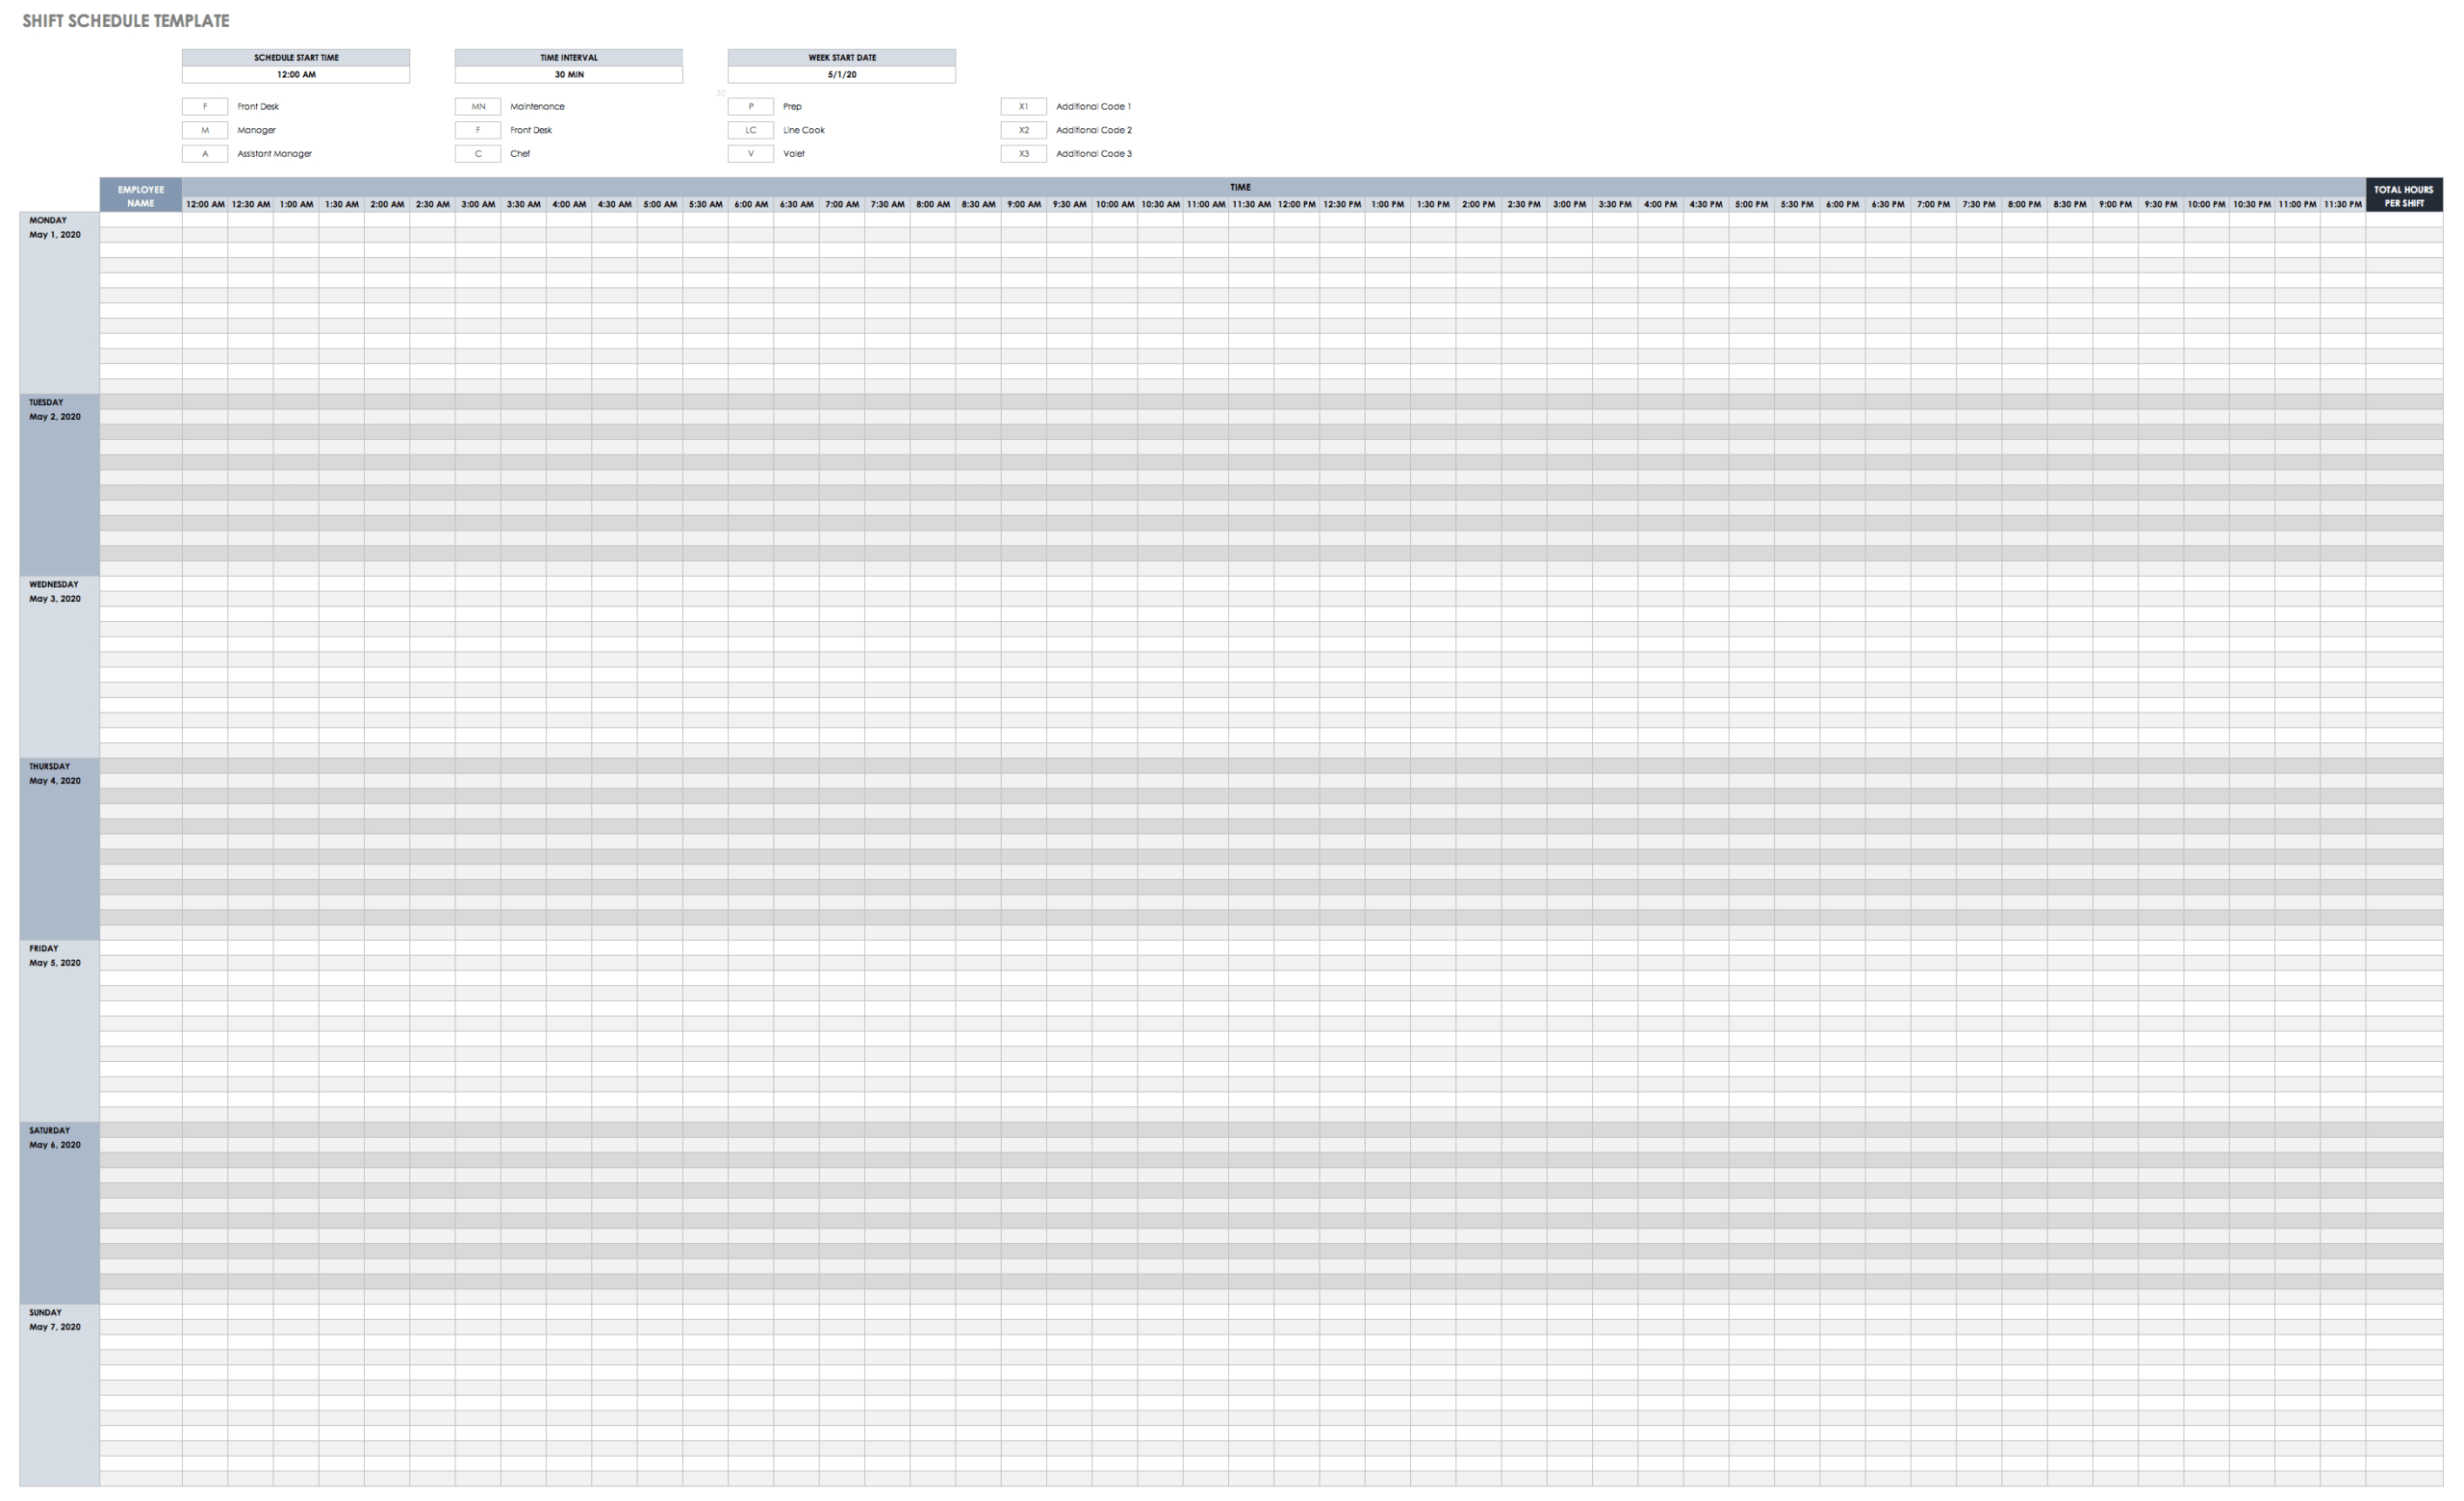 smartsheet free work schedule templates